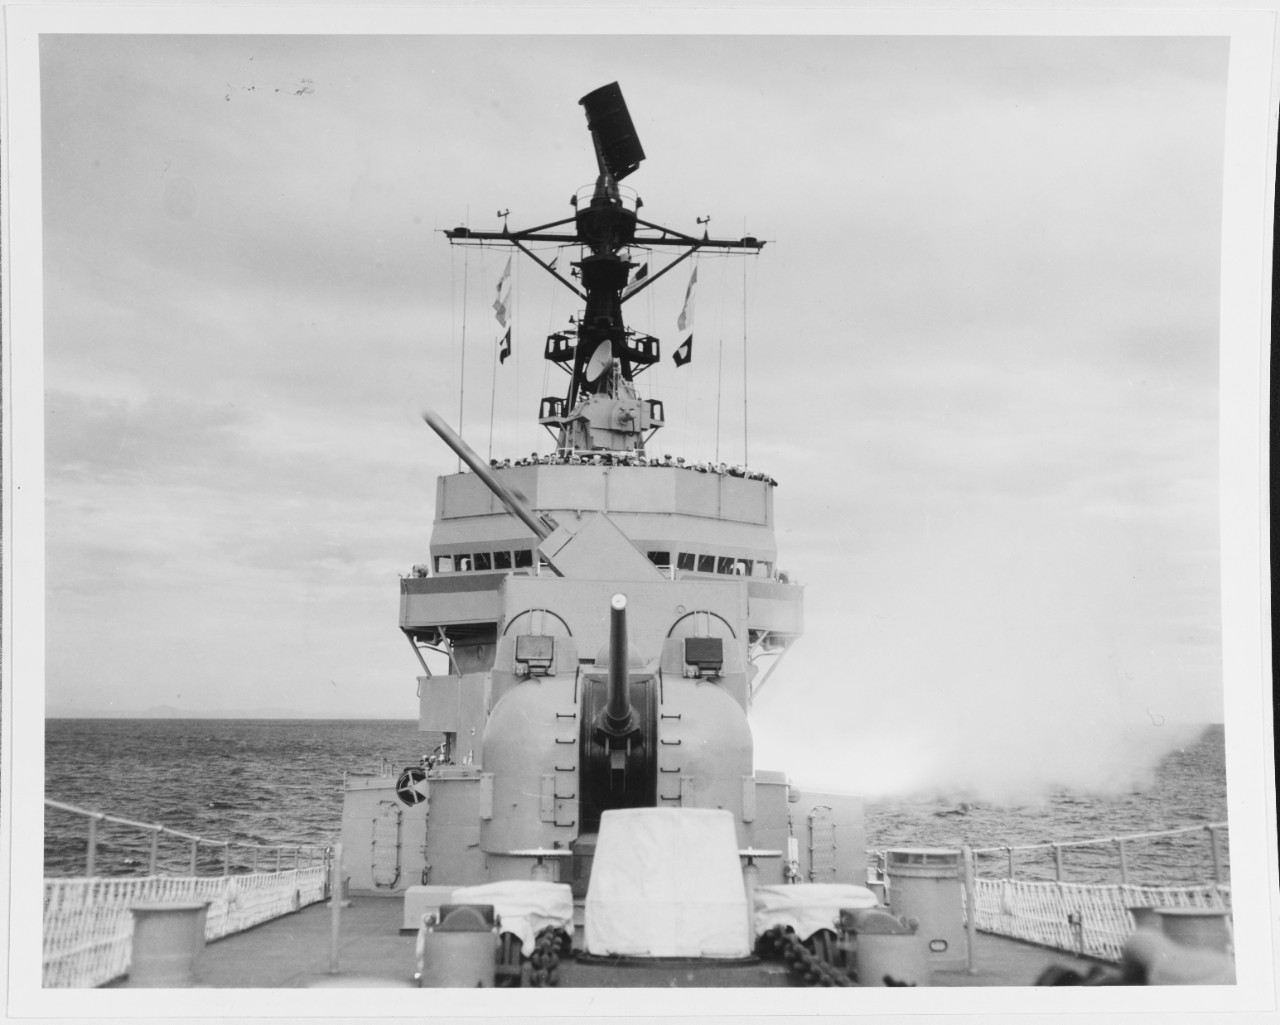 ASROC, Anti-submarine Rocket Launcher "ASROC" on board the USS MAHAN (DLG-11), January 20, 1961